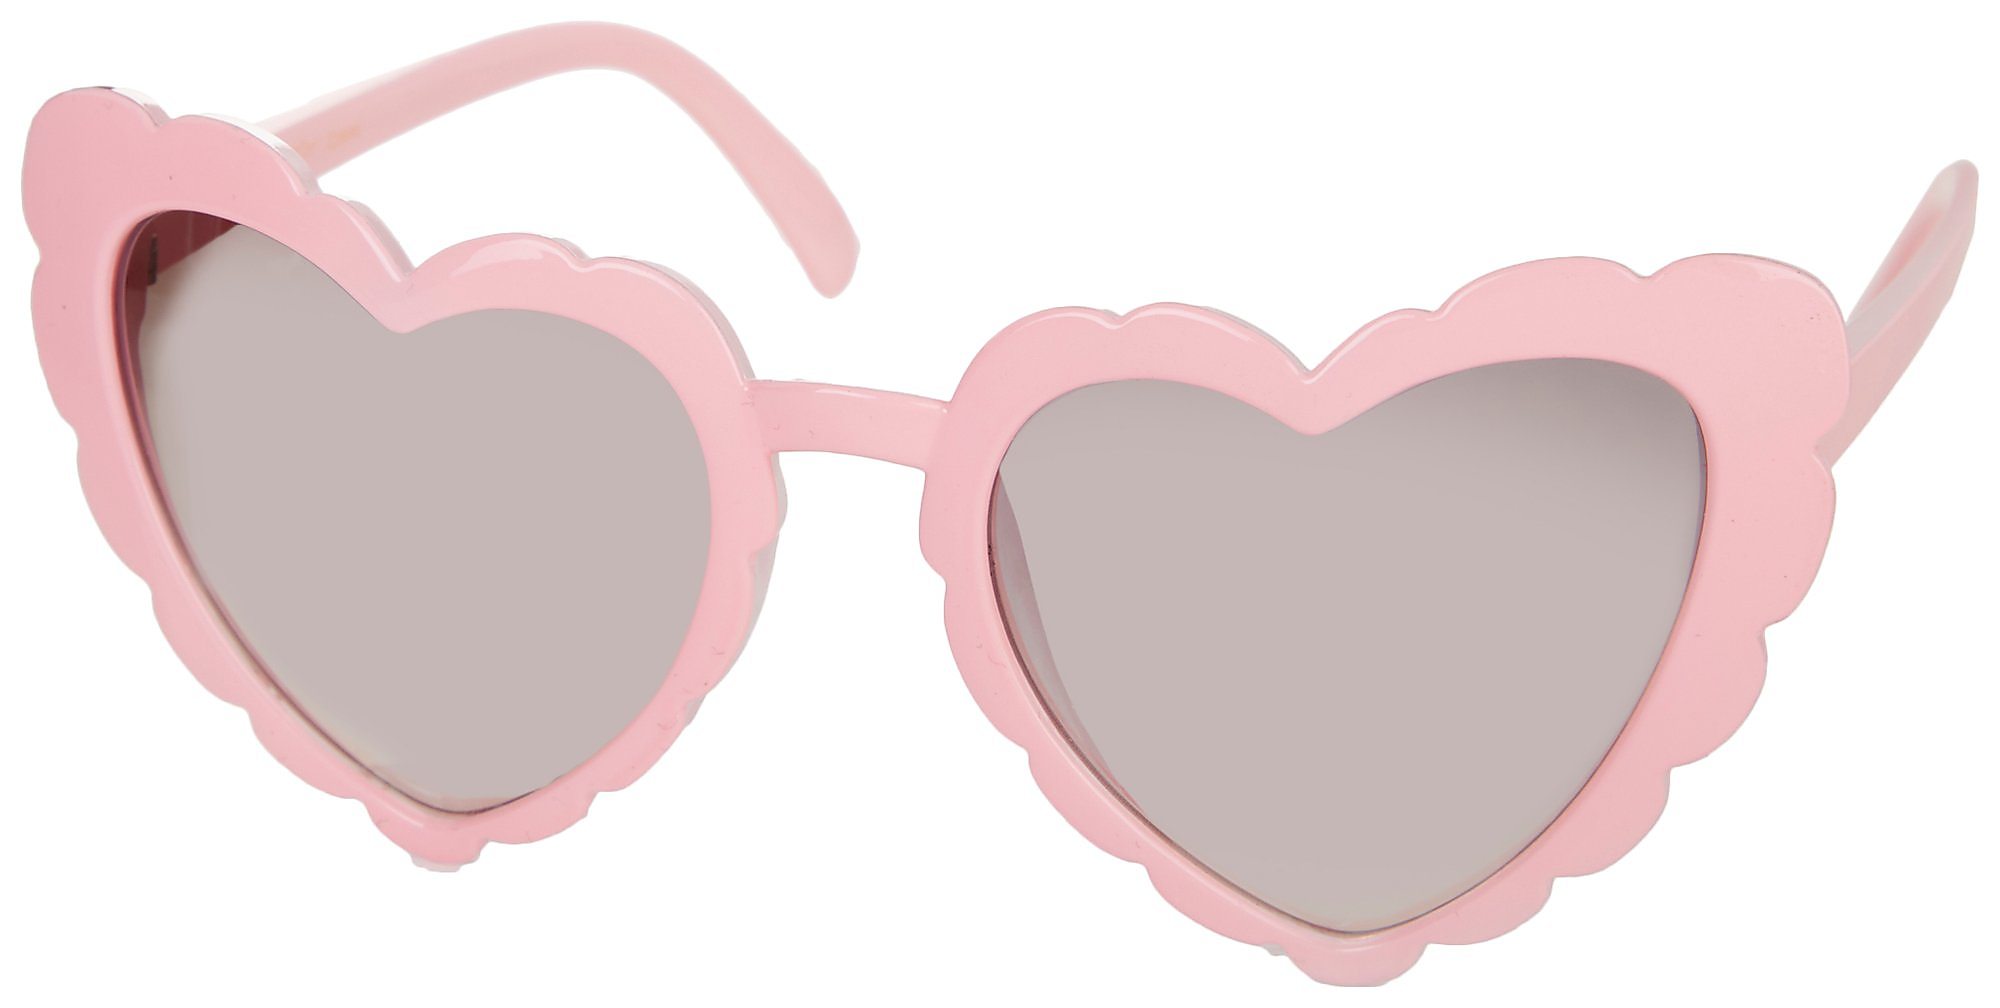 Betsey Johnson Womens Heart-Shaped Sunglasses | eBay